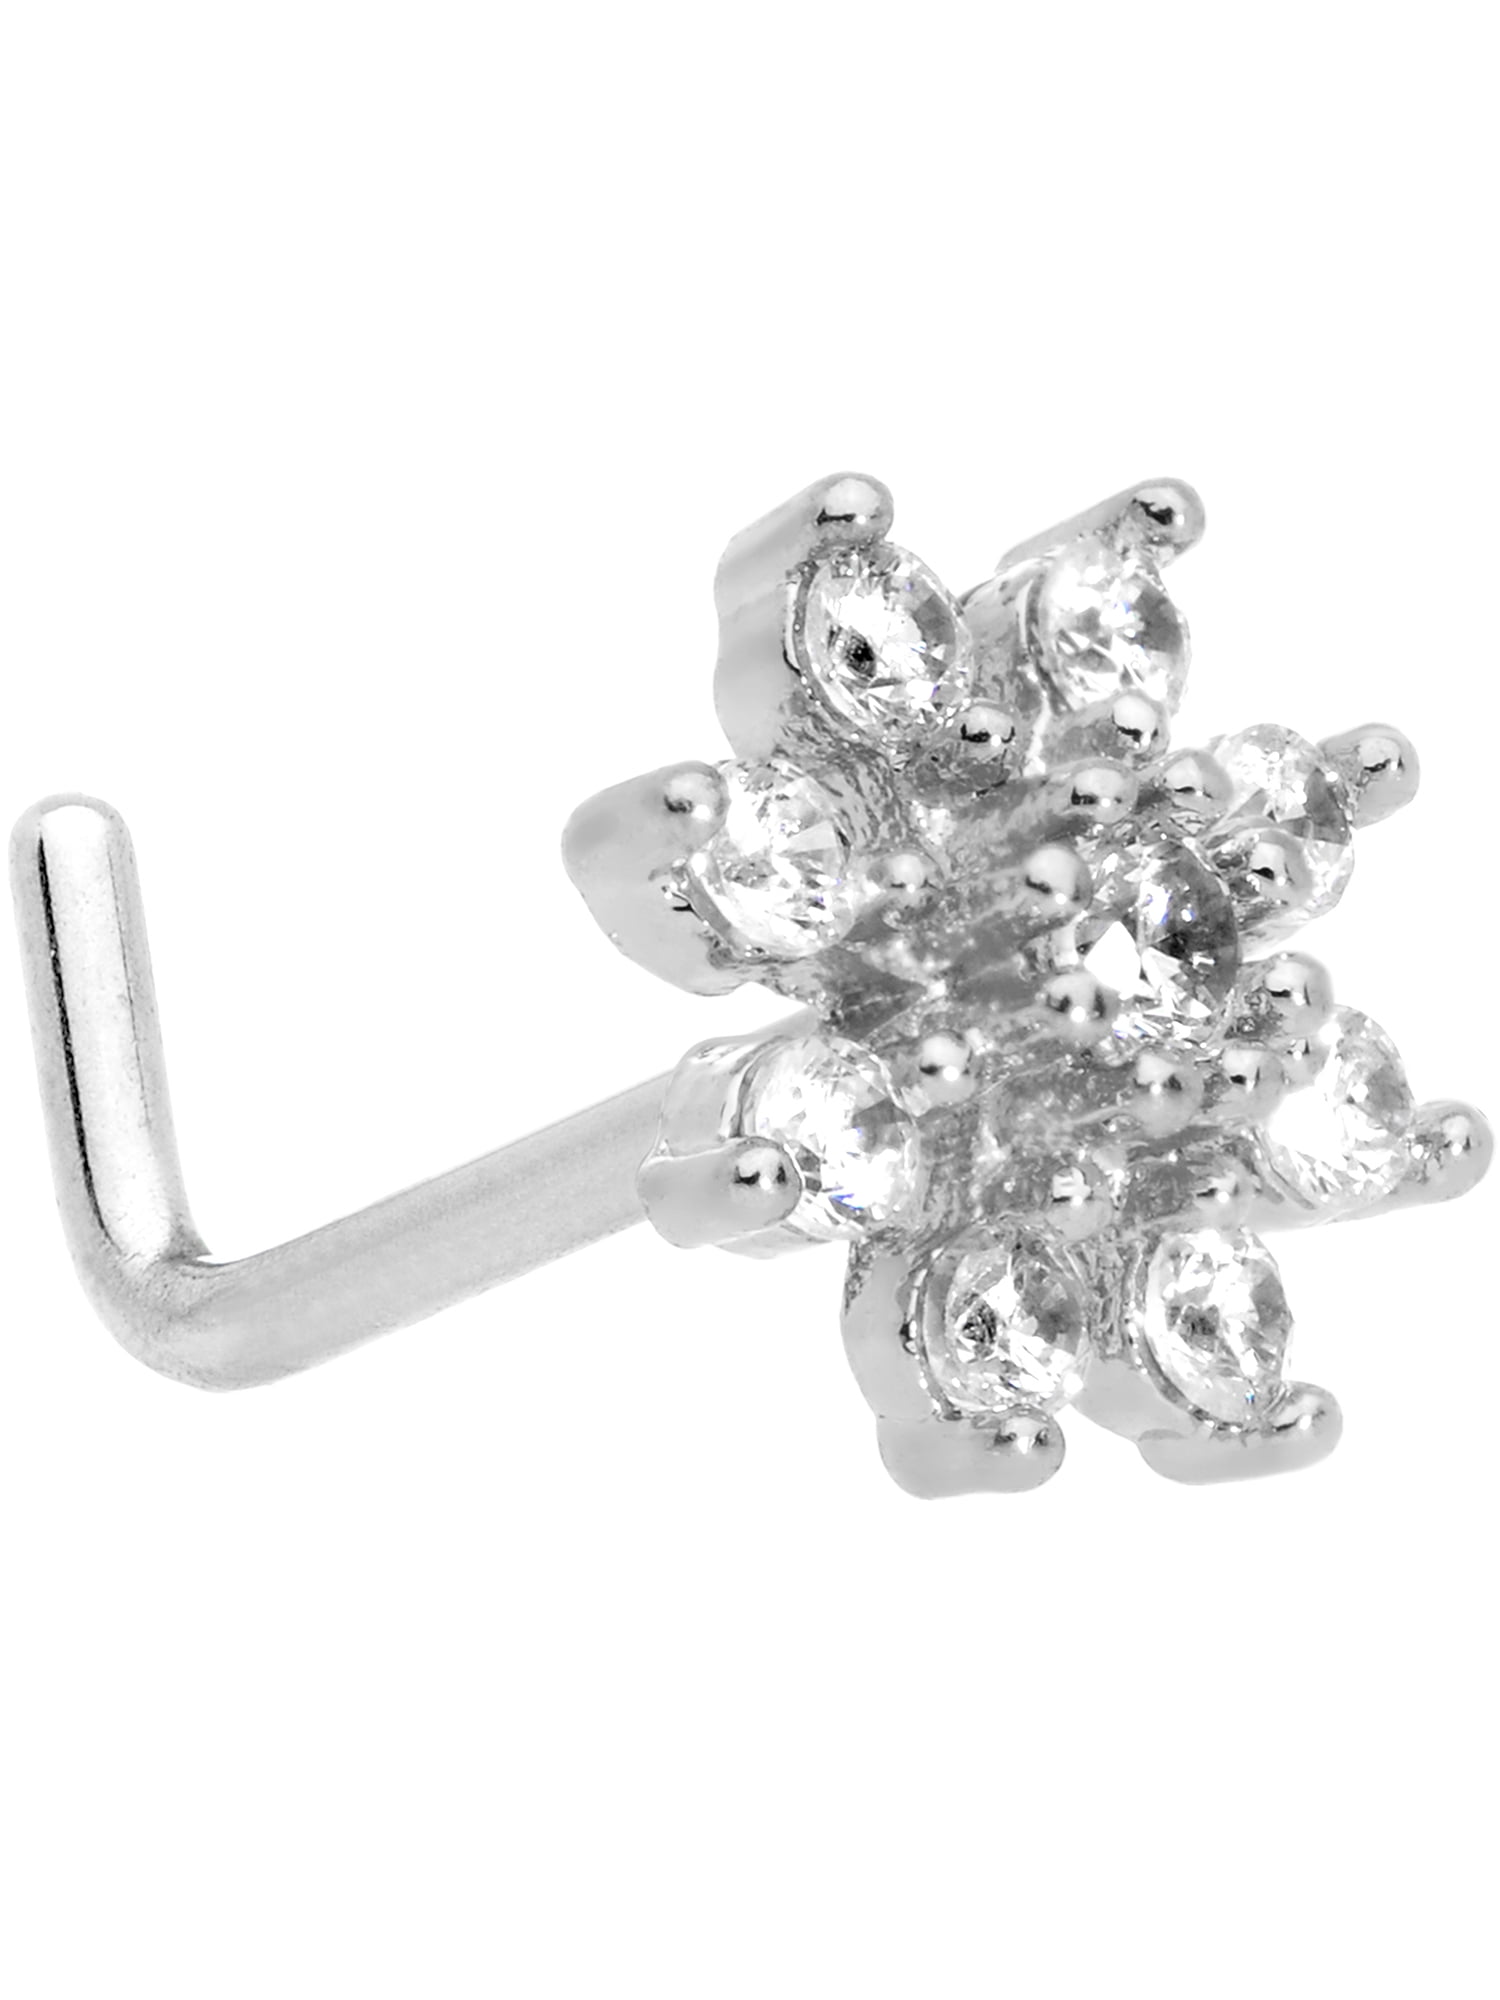 Sterling Silver Nose Stud Pin Ring L Shape Clear CZ Crystal Flower 20g 20 gauge 